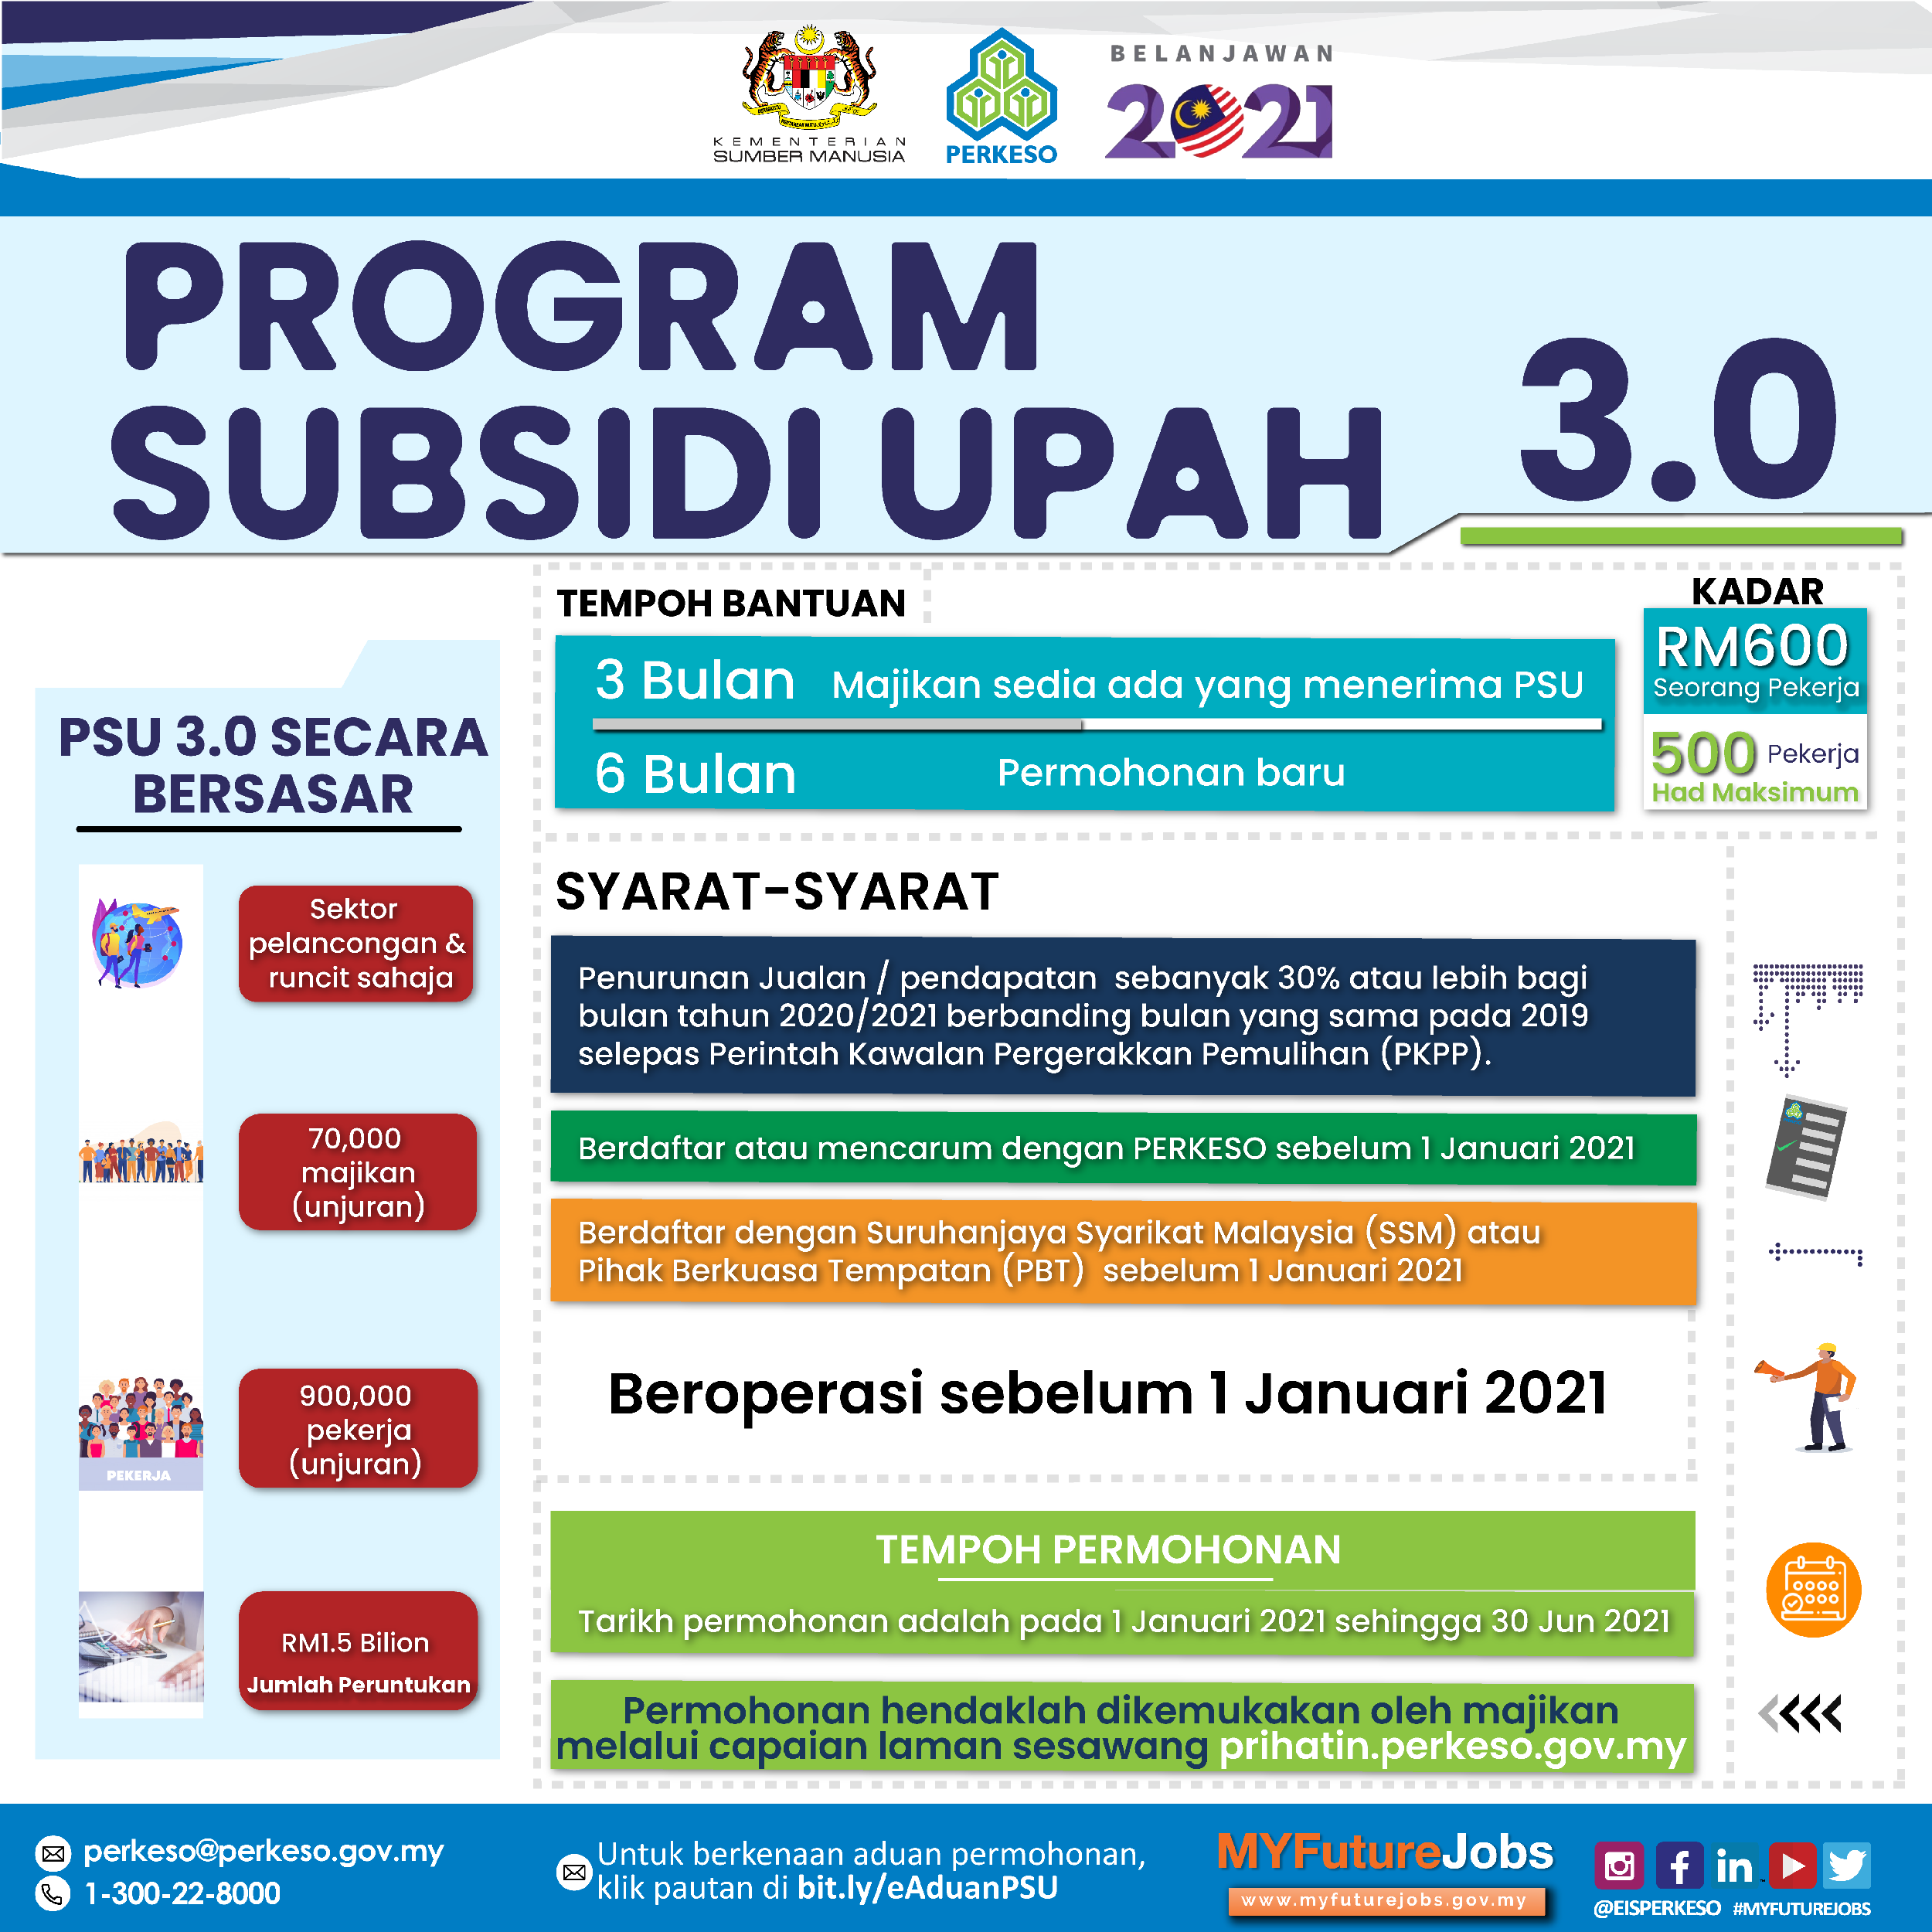 Belanjawan 2021 malaysia